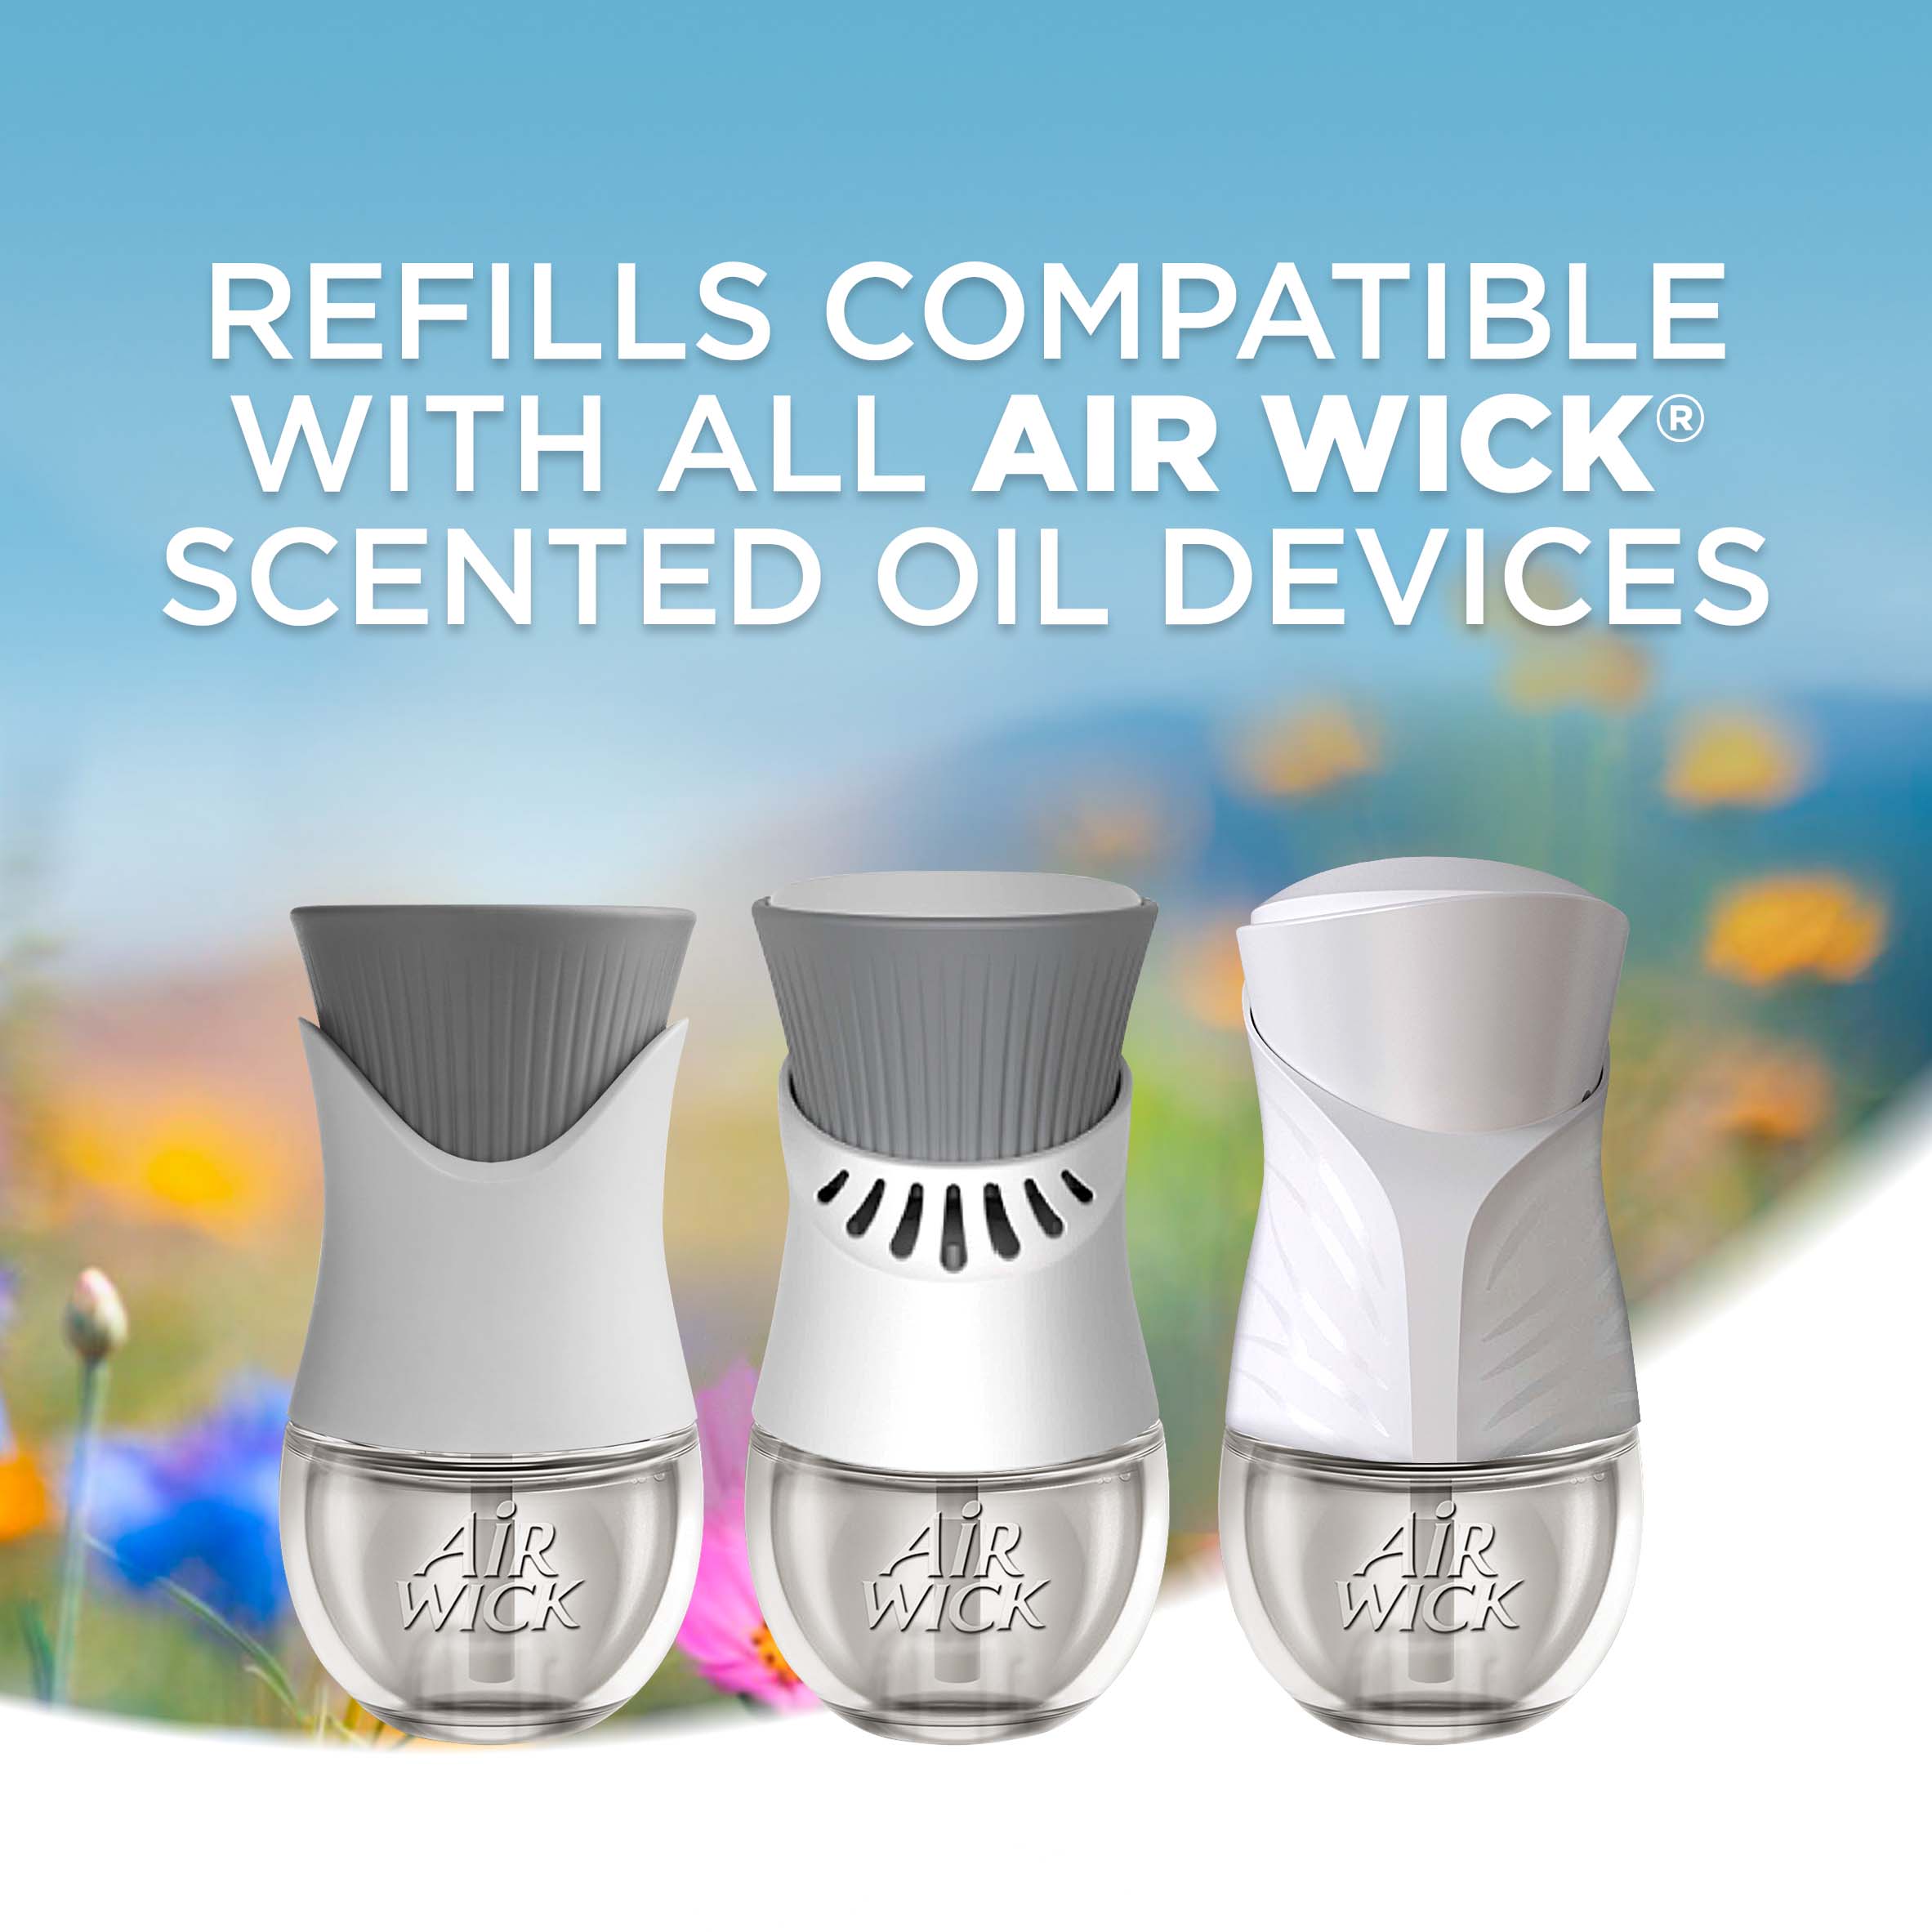 Air Wick 0.67-fl oz Hawaii Refill Air Freshener (5-Pack) in the